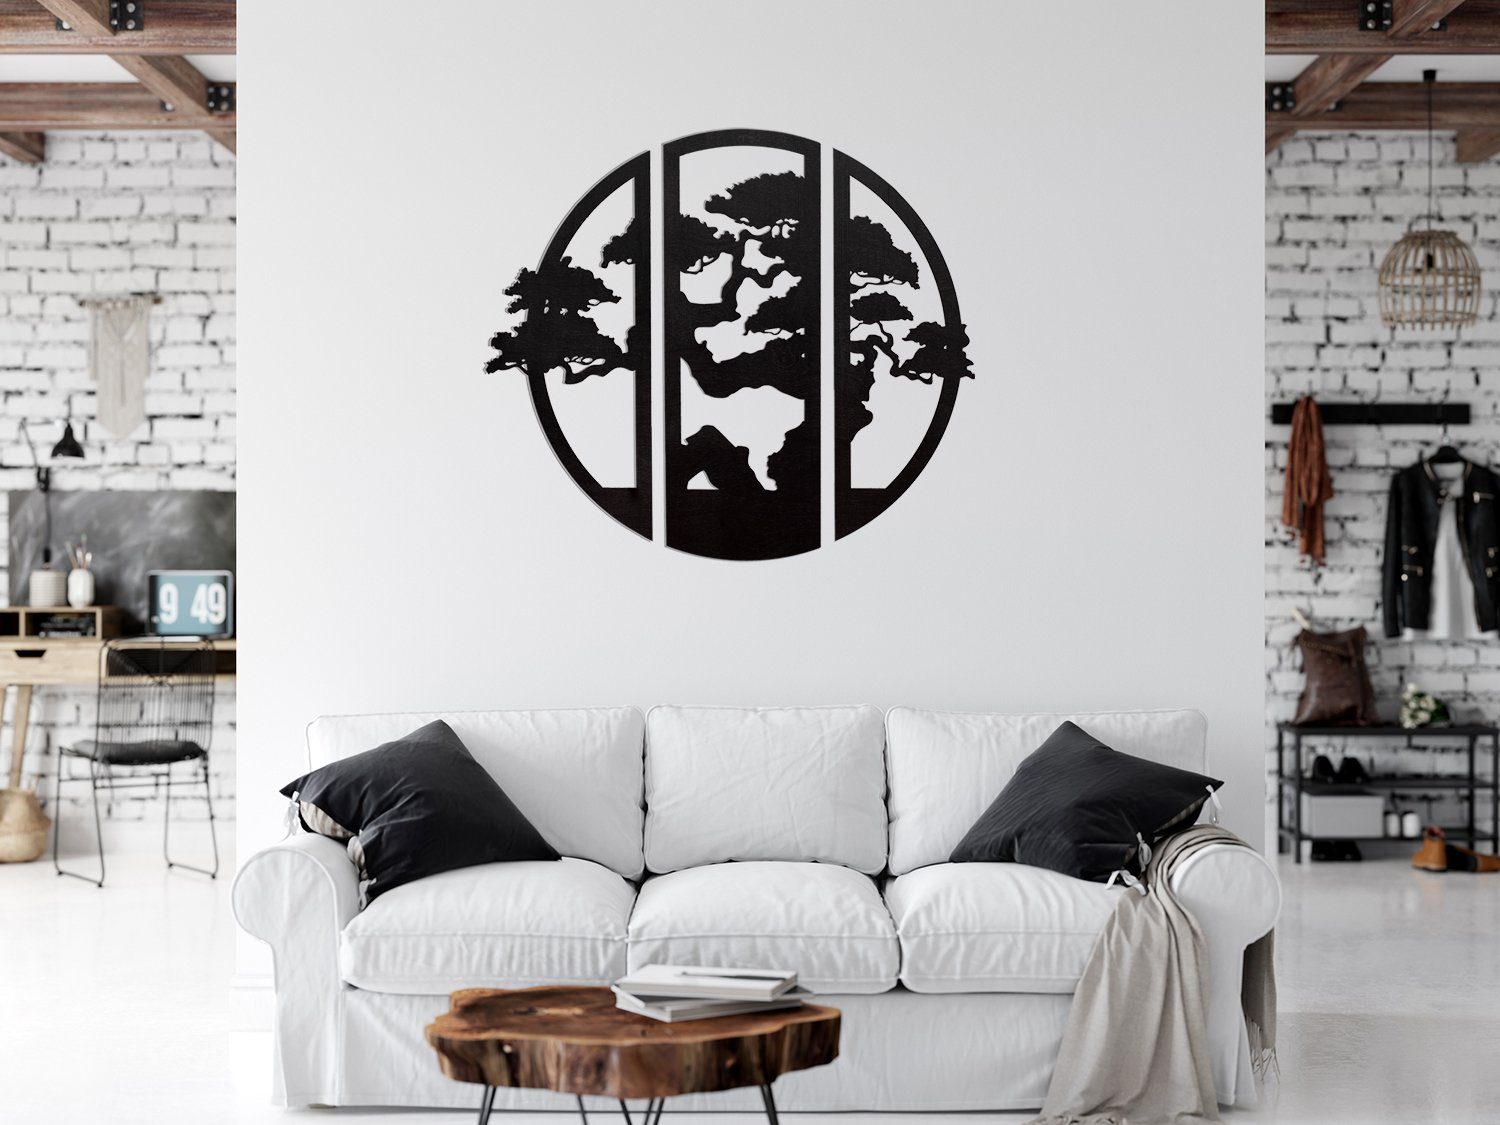 Bonsai, Wanddekoobjekt Wandpaneel, 3D ORNAMENTI Wanddekoration, Handarbeit grosse